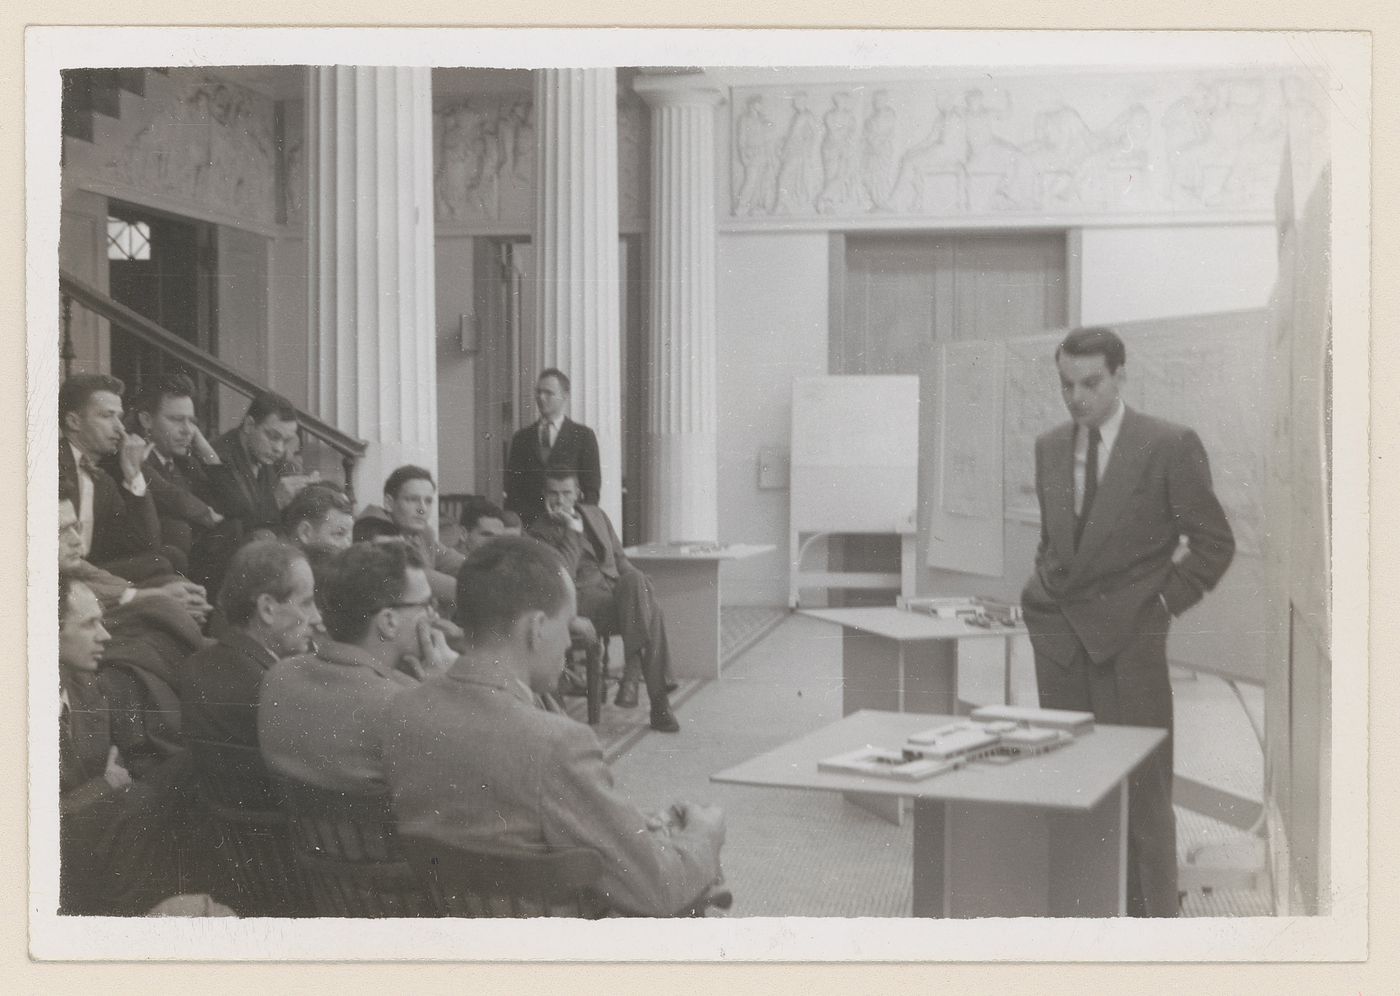 Parkin giving presentation to classroom, possibly at Harvard